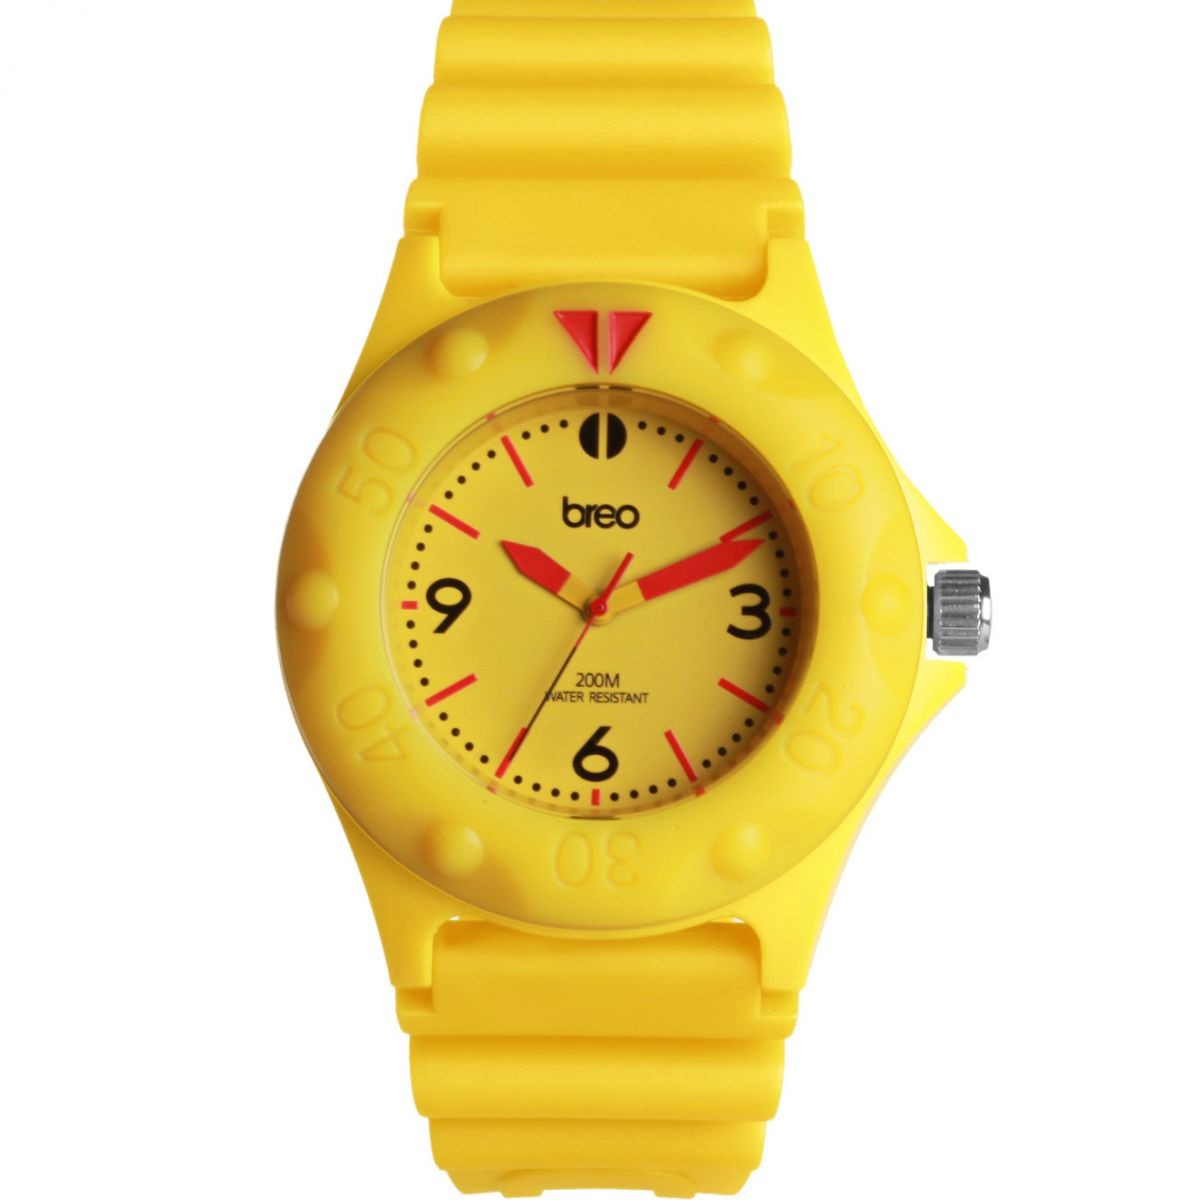 Breo - Men's Watch in Yellow - Watch Shop GOOFASH